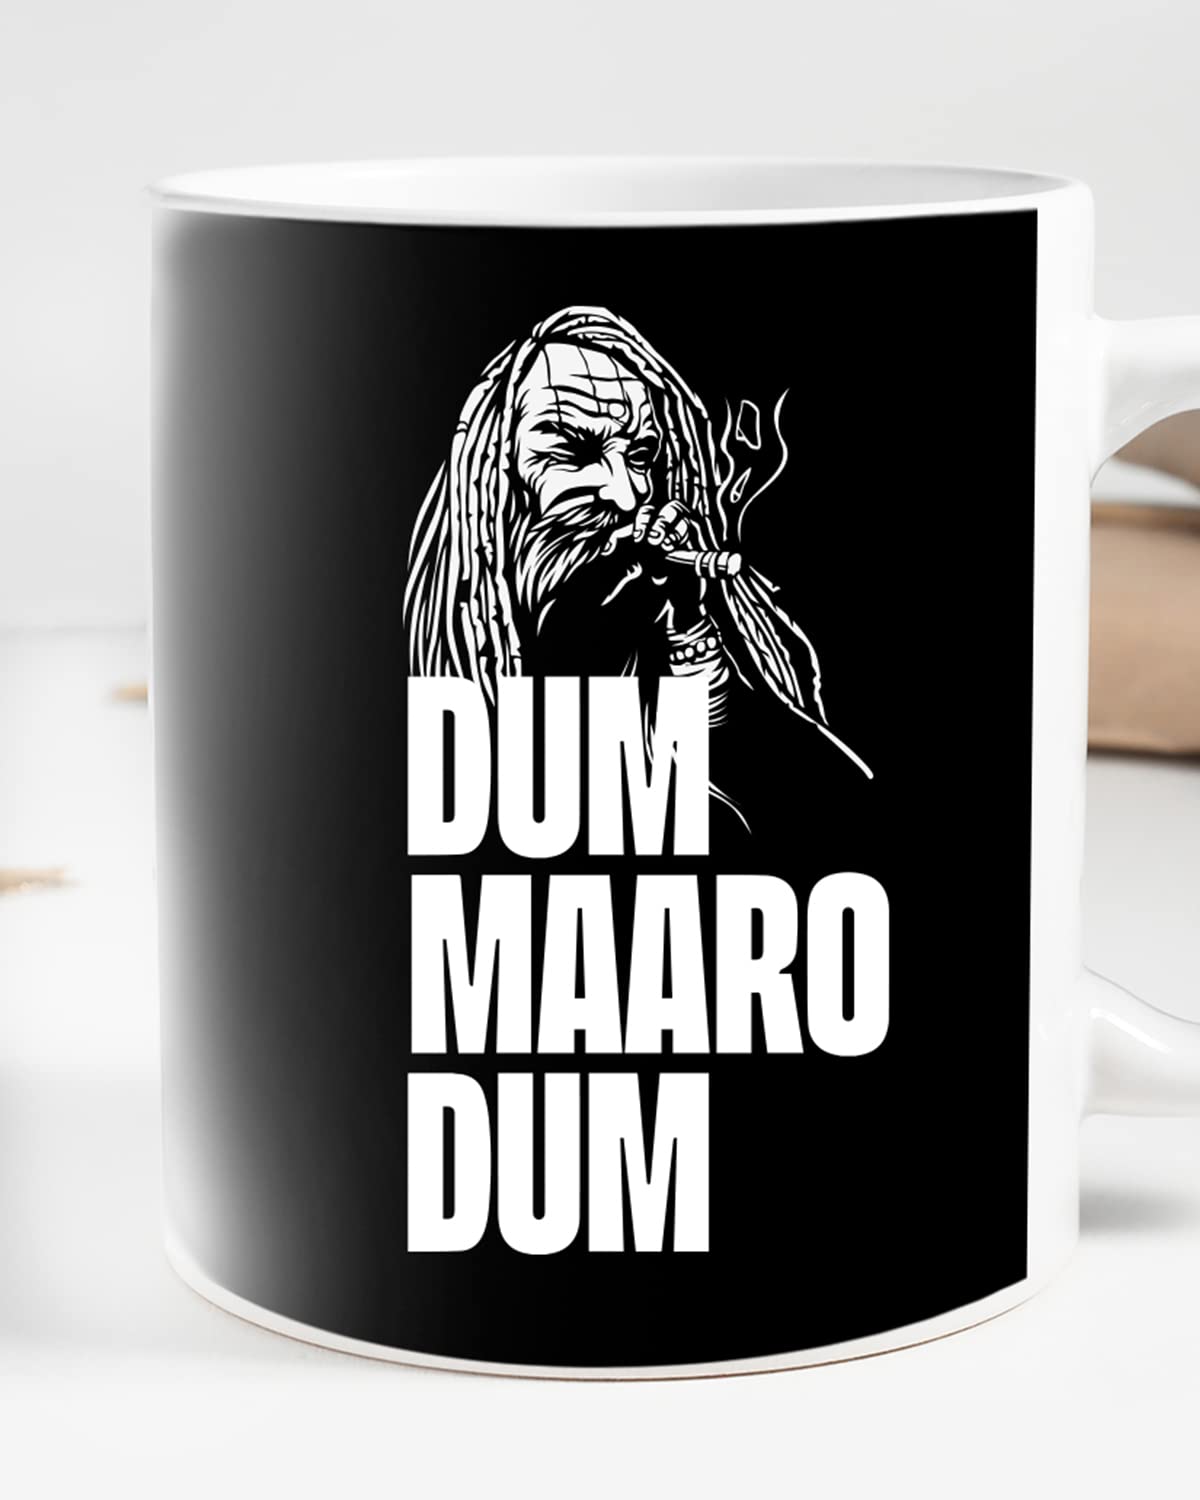 DUM MAARO DUM Coffee Mug - Gift for Friend, Birthday Gift, Birthday Mug, Motivational Quotes Mug, Mugs with Funny & Funky Dialogues, Bollywood Mugs, Funny Mugs for Him & Her